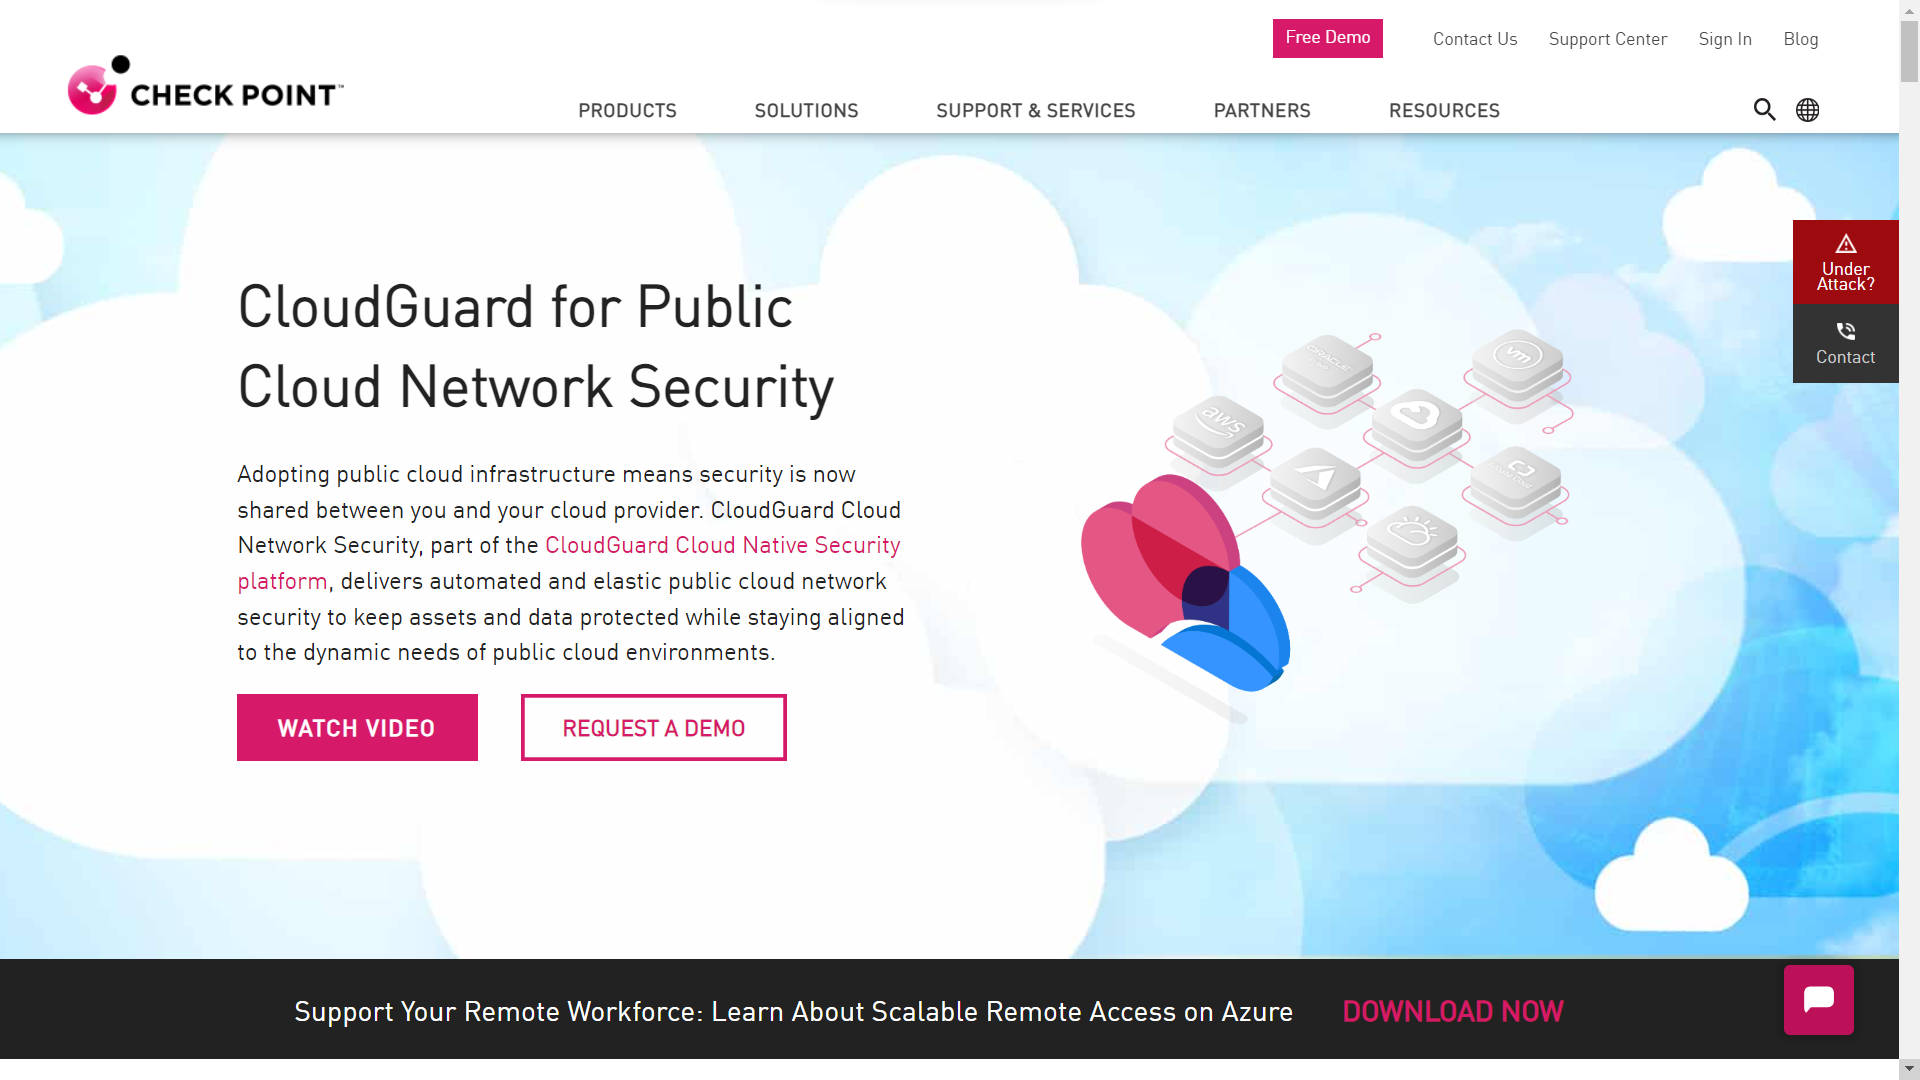 CloudGuard Network Security (IaaS)